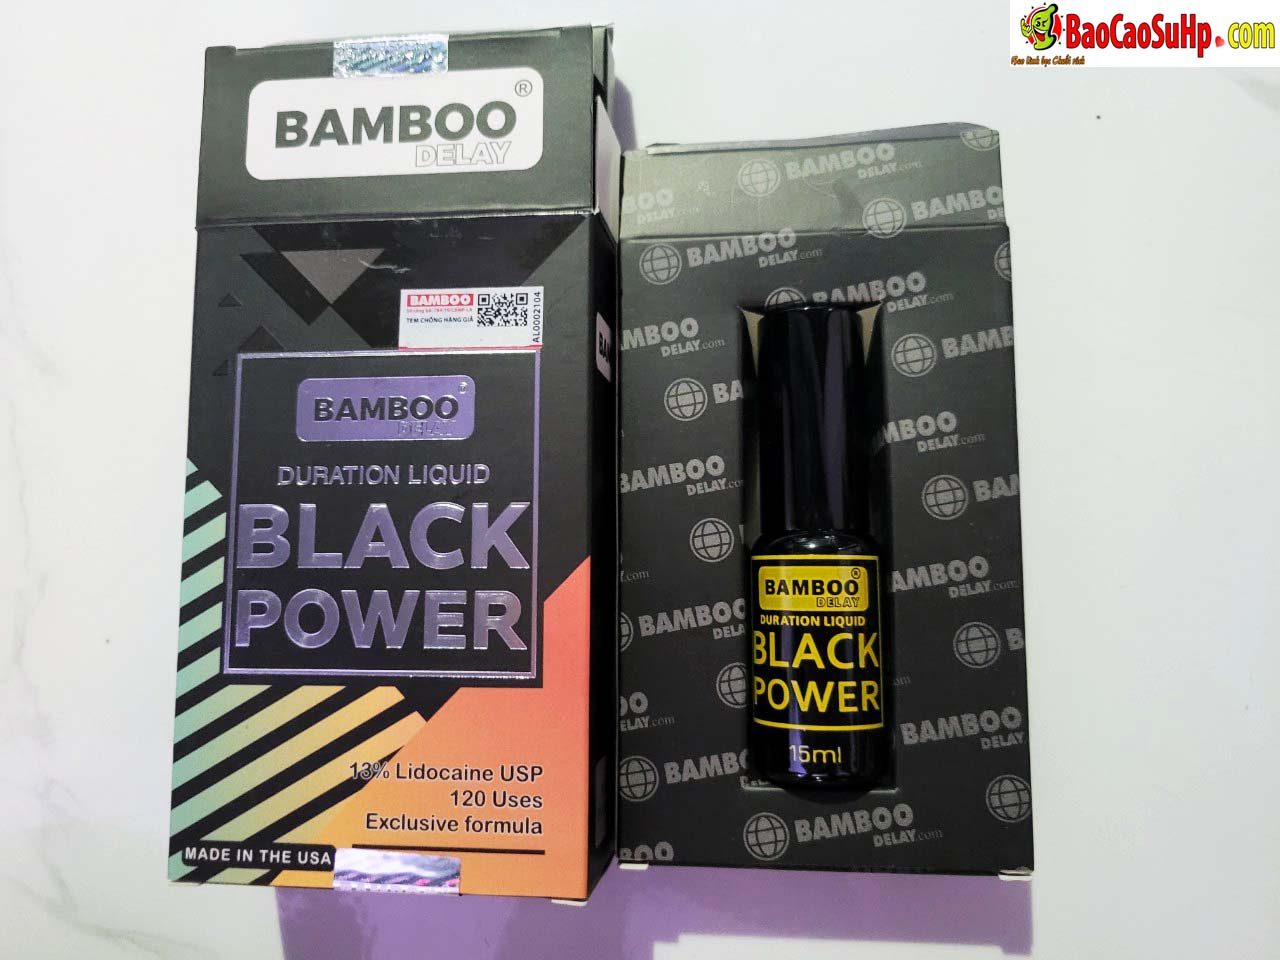 Chai xit keo dai thoi gian USA Bamboo Black Edition 6 - Chai xịt kéo dài thời gian USA Bamboo Black Edition 15ml 13%